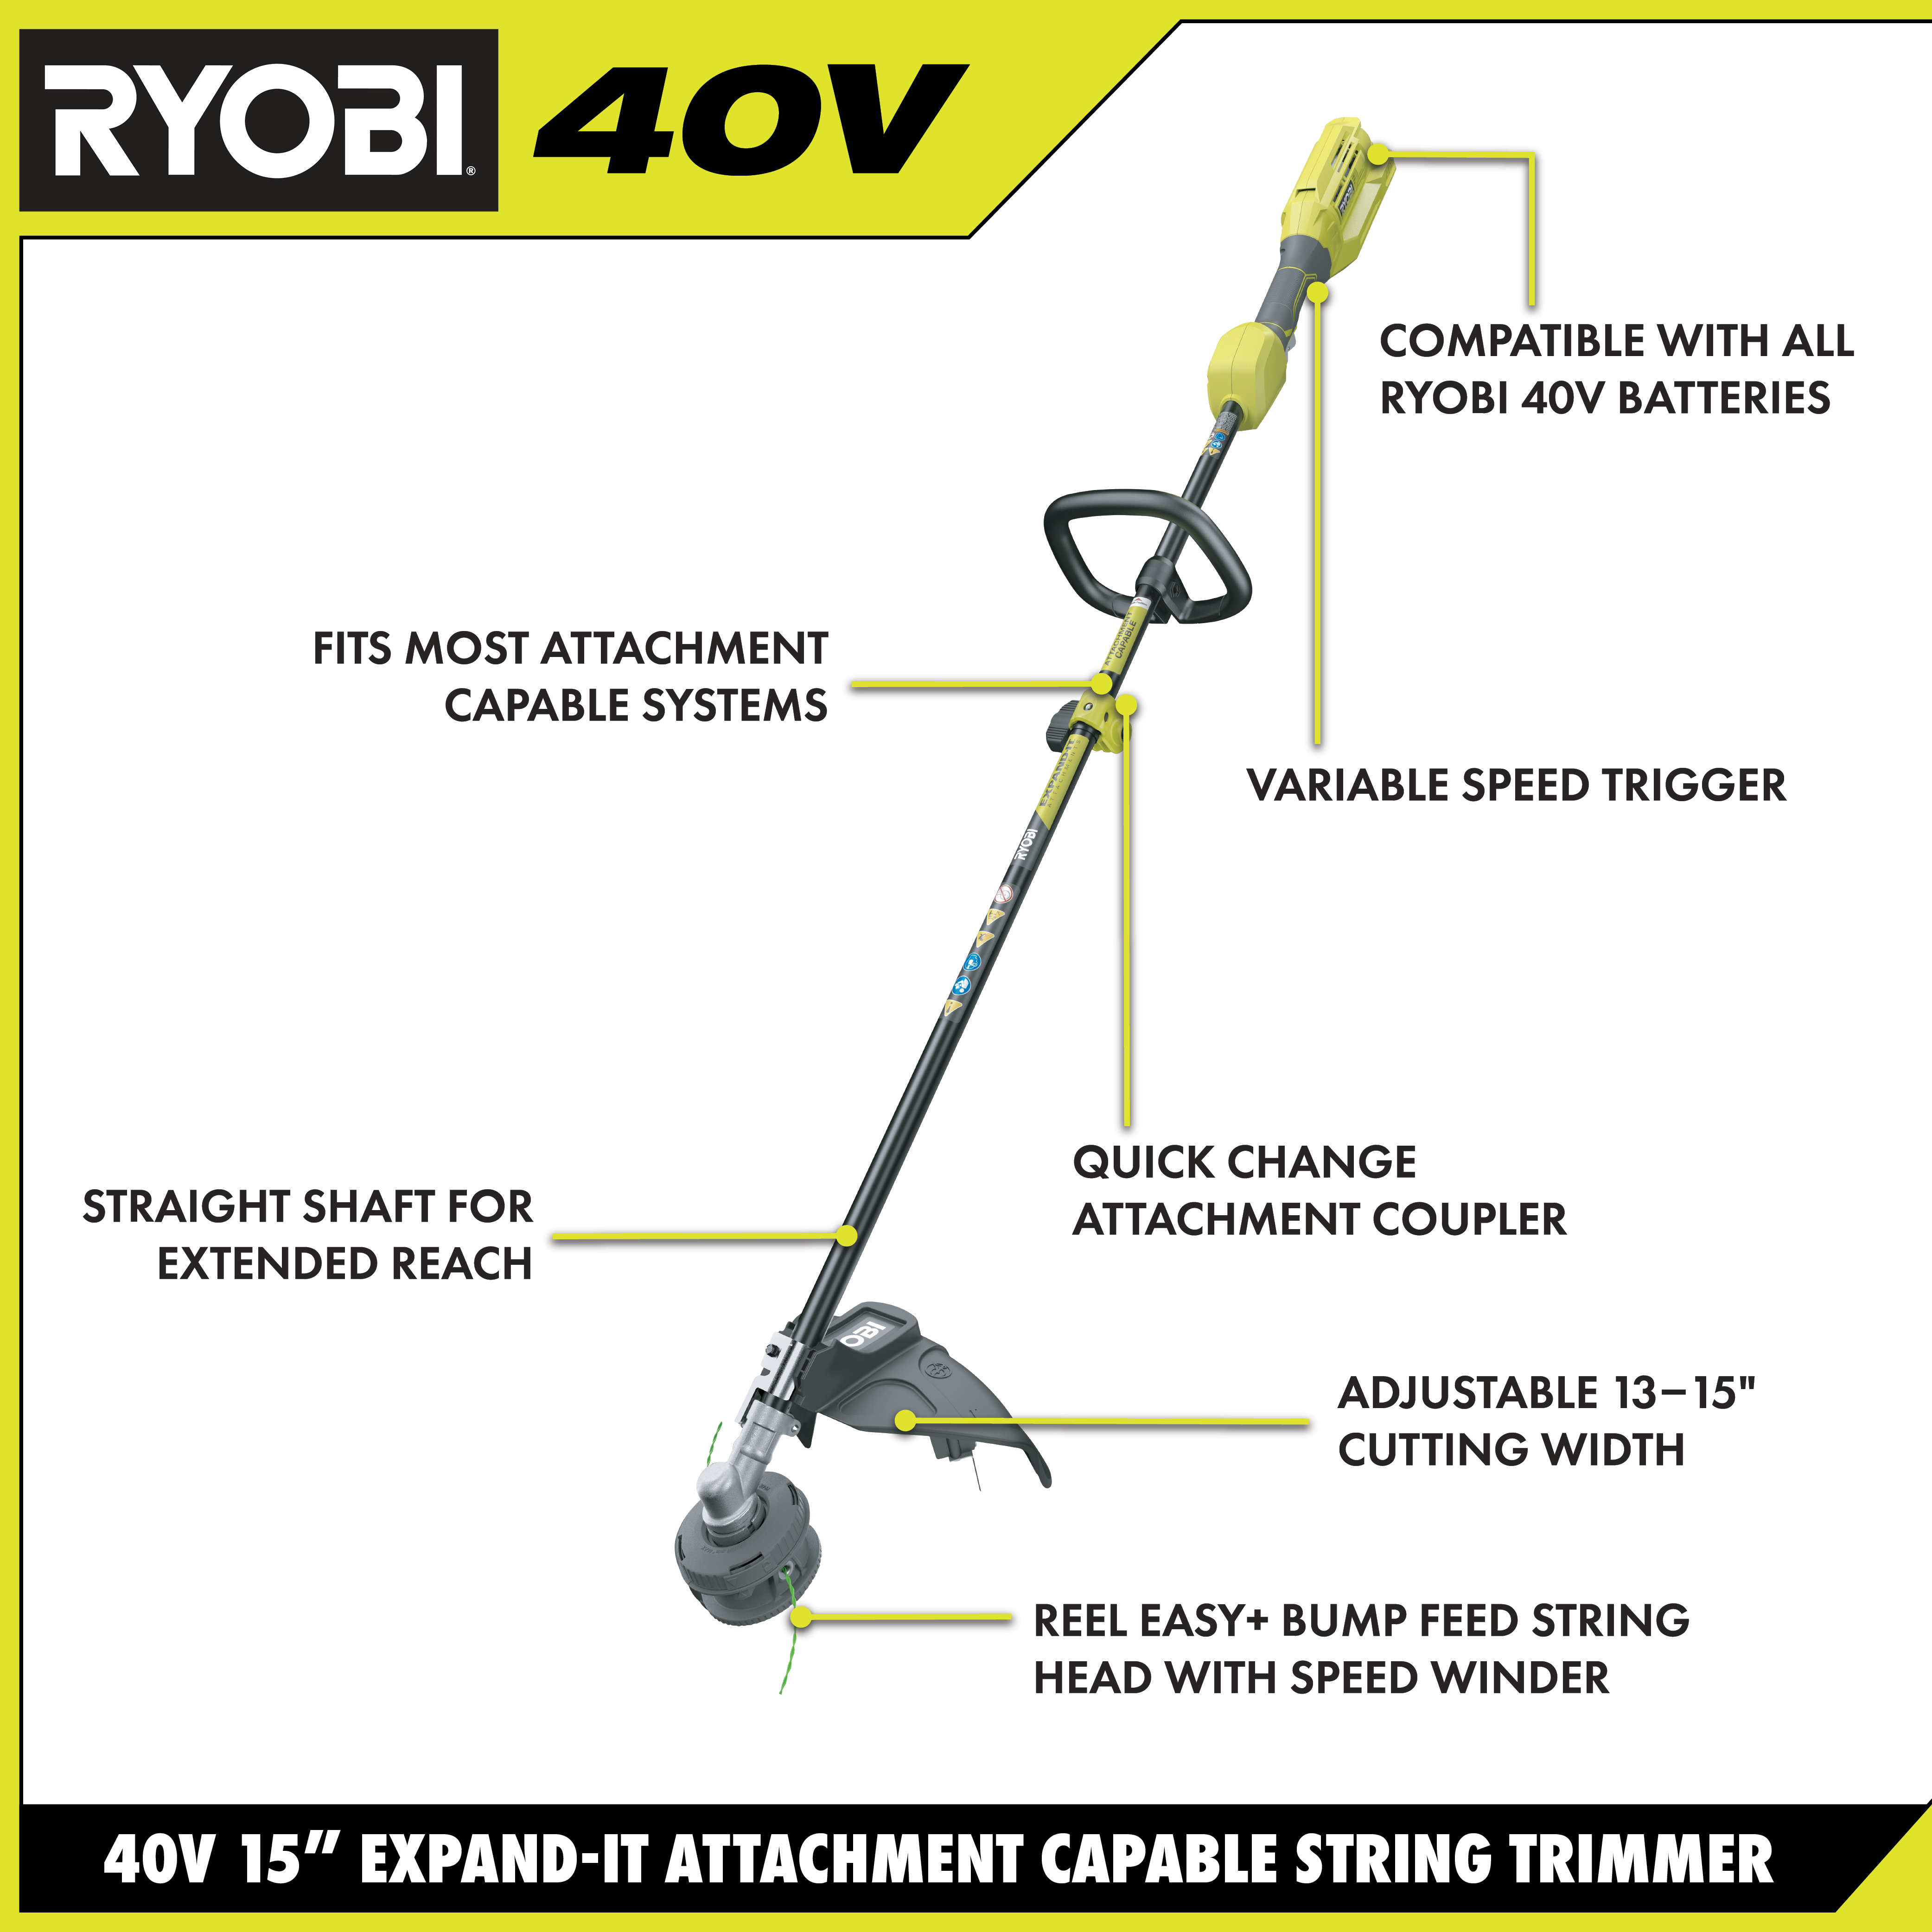 40V ATTACHMENT CAPABLE 15 STRING TRIMMER KIT - RYOBI Tools